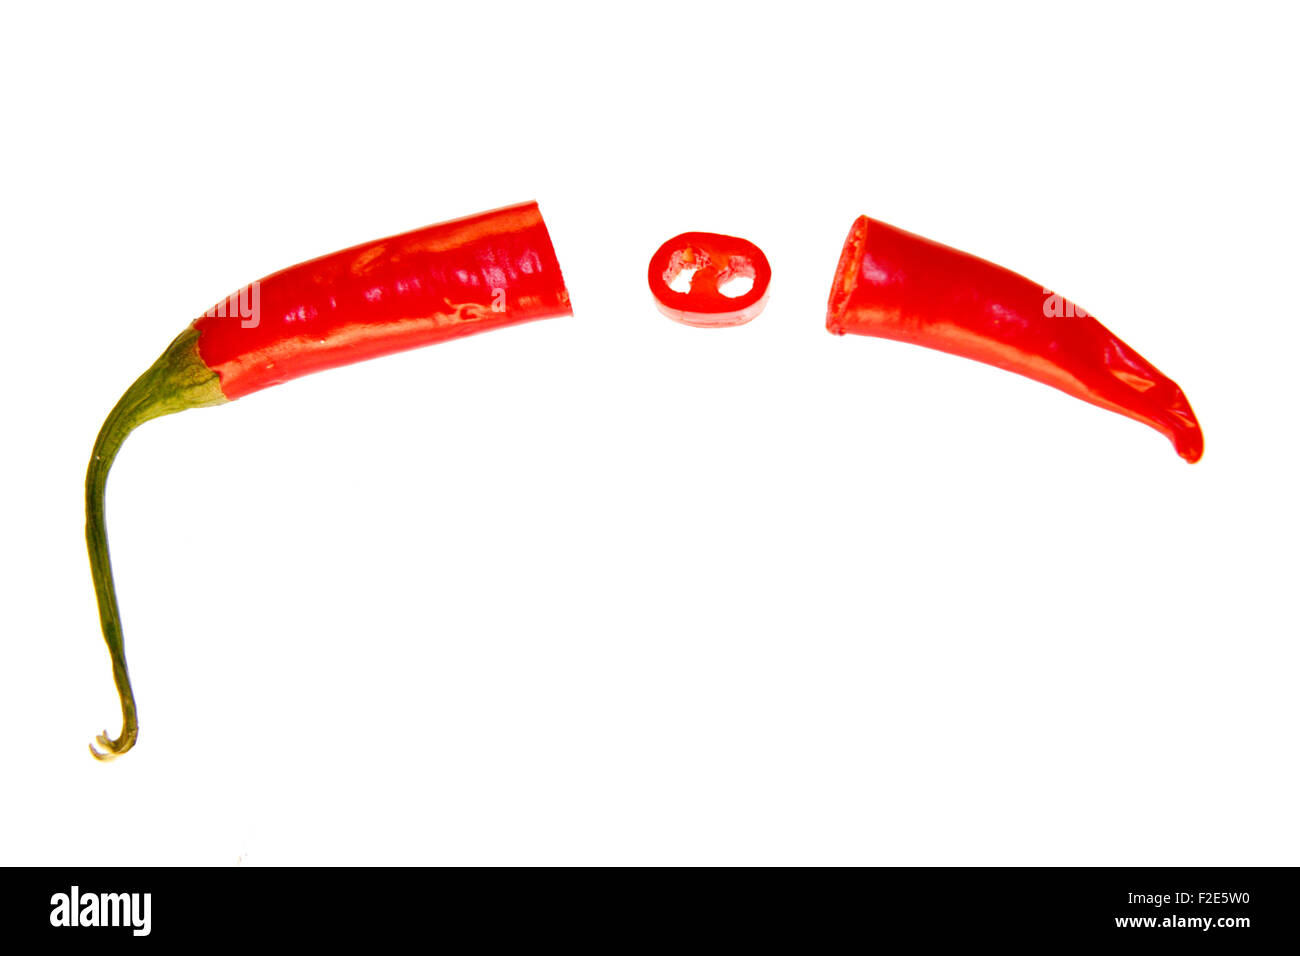 Rote Chilly-Schote - Symbolbild Nahrungsmittel. Stockfoto